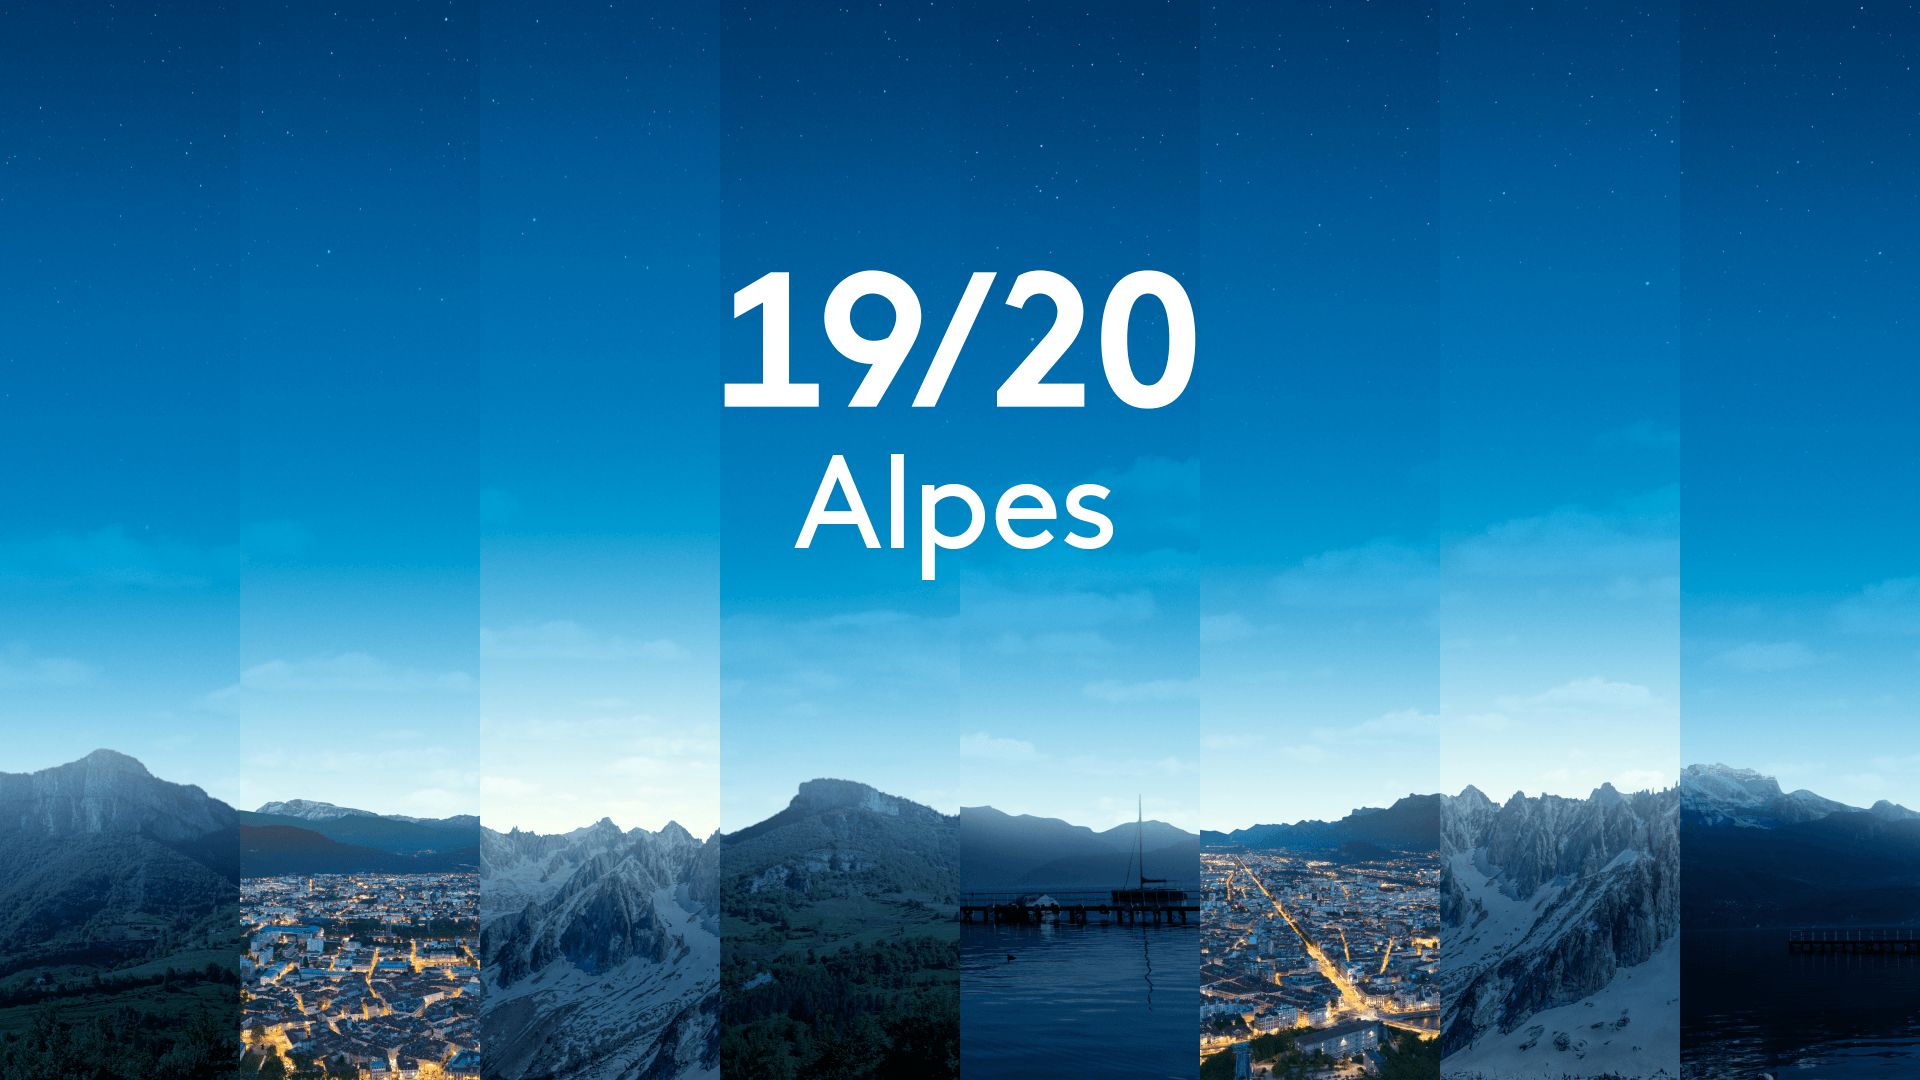 JT 19/20 - Alpes